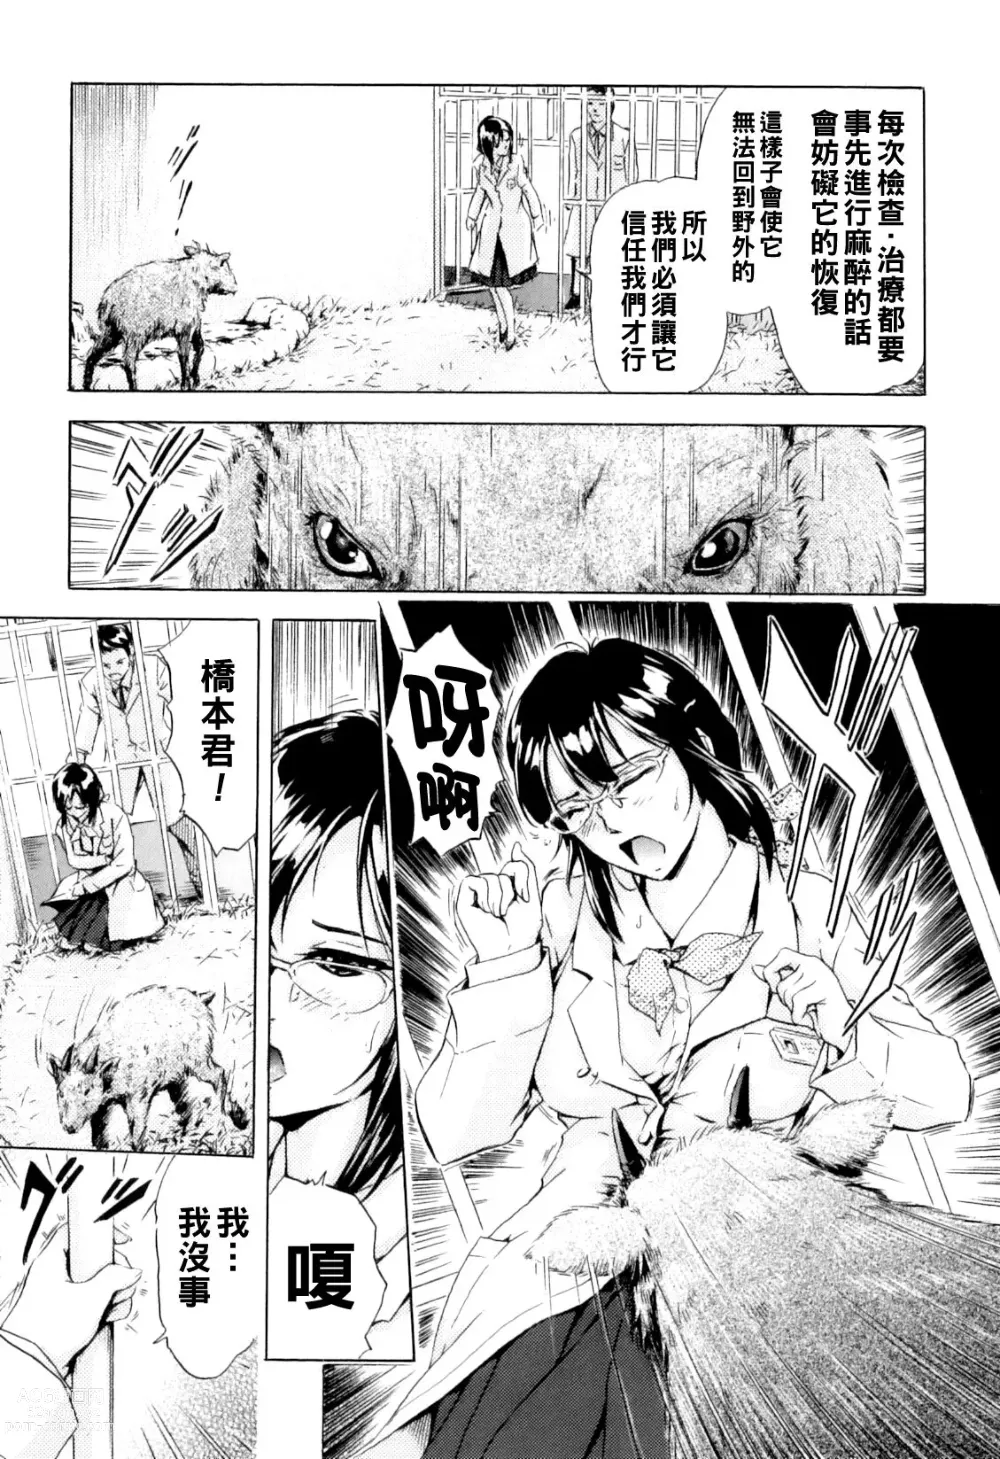 Page 3 of manga Tokubetsu Tennen Kinenbutsu - Special Natural Monuments